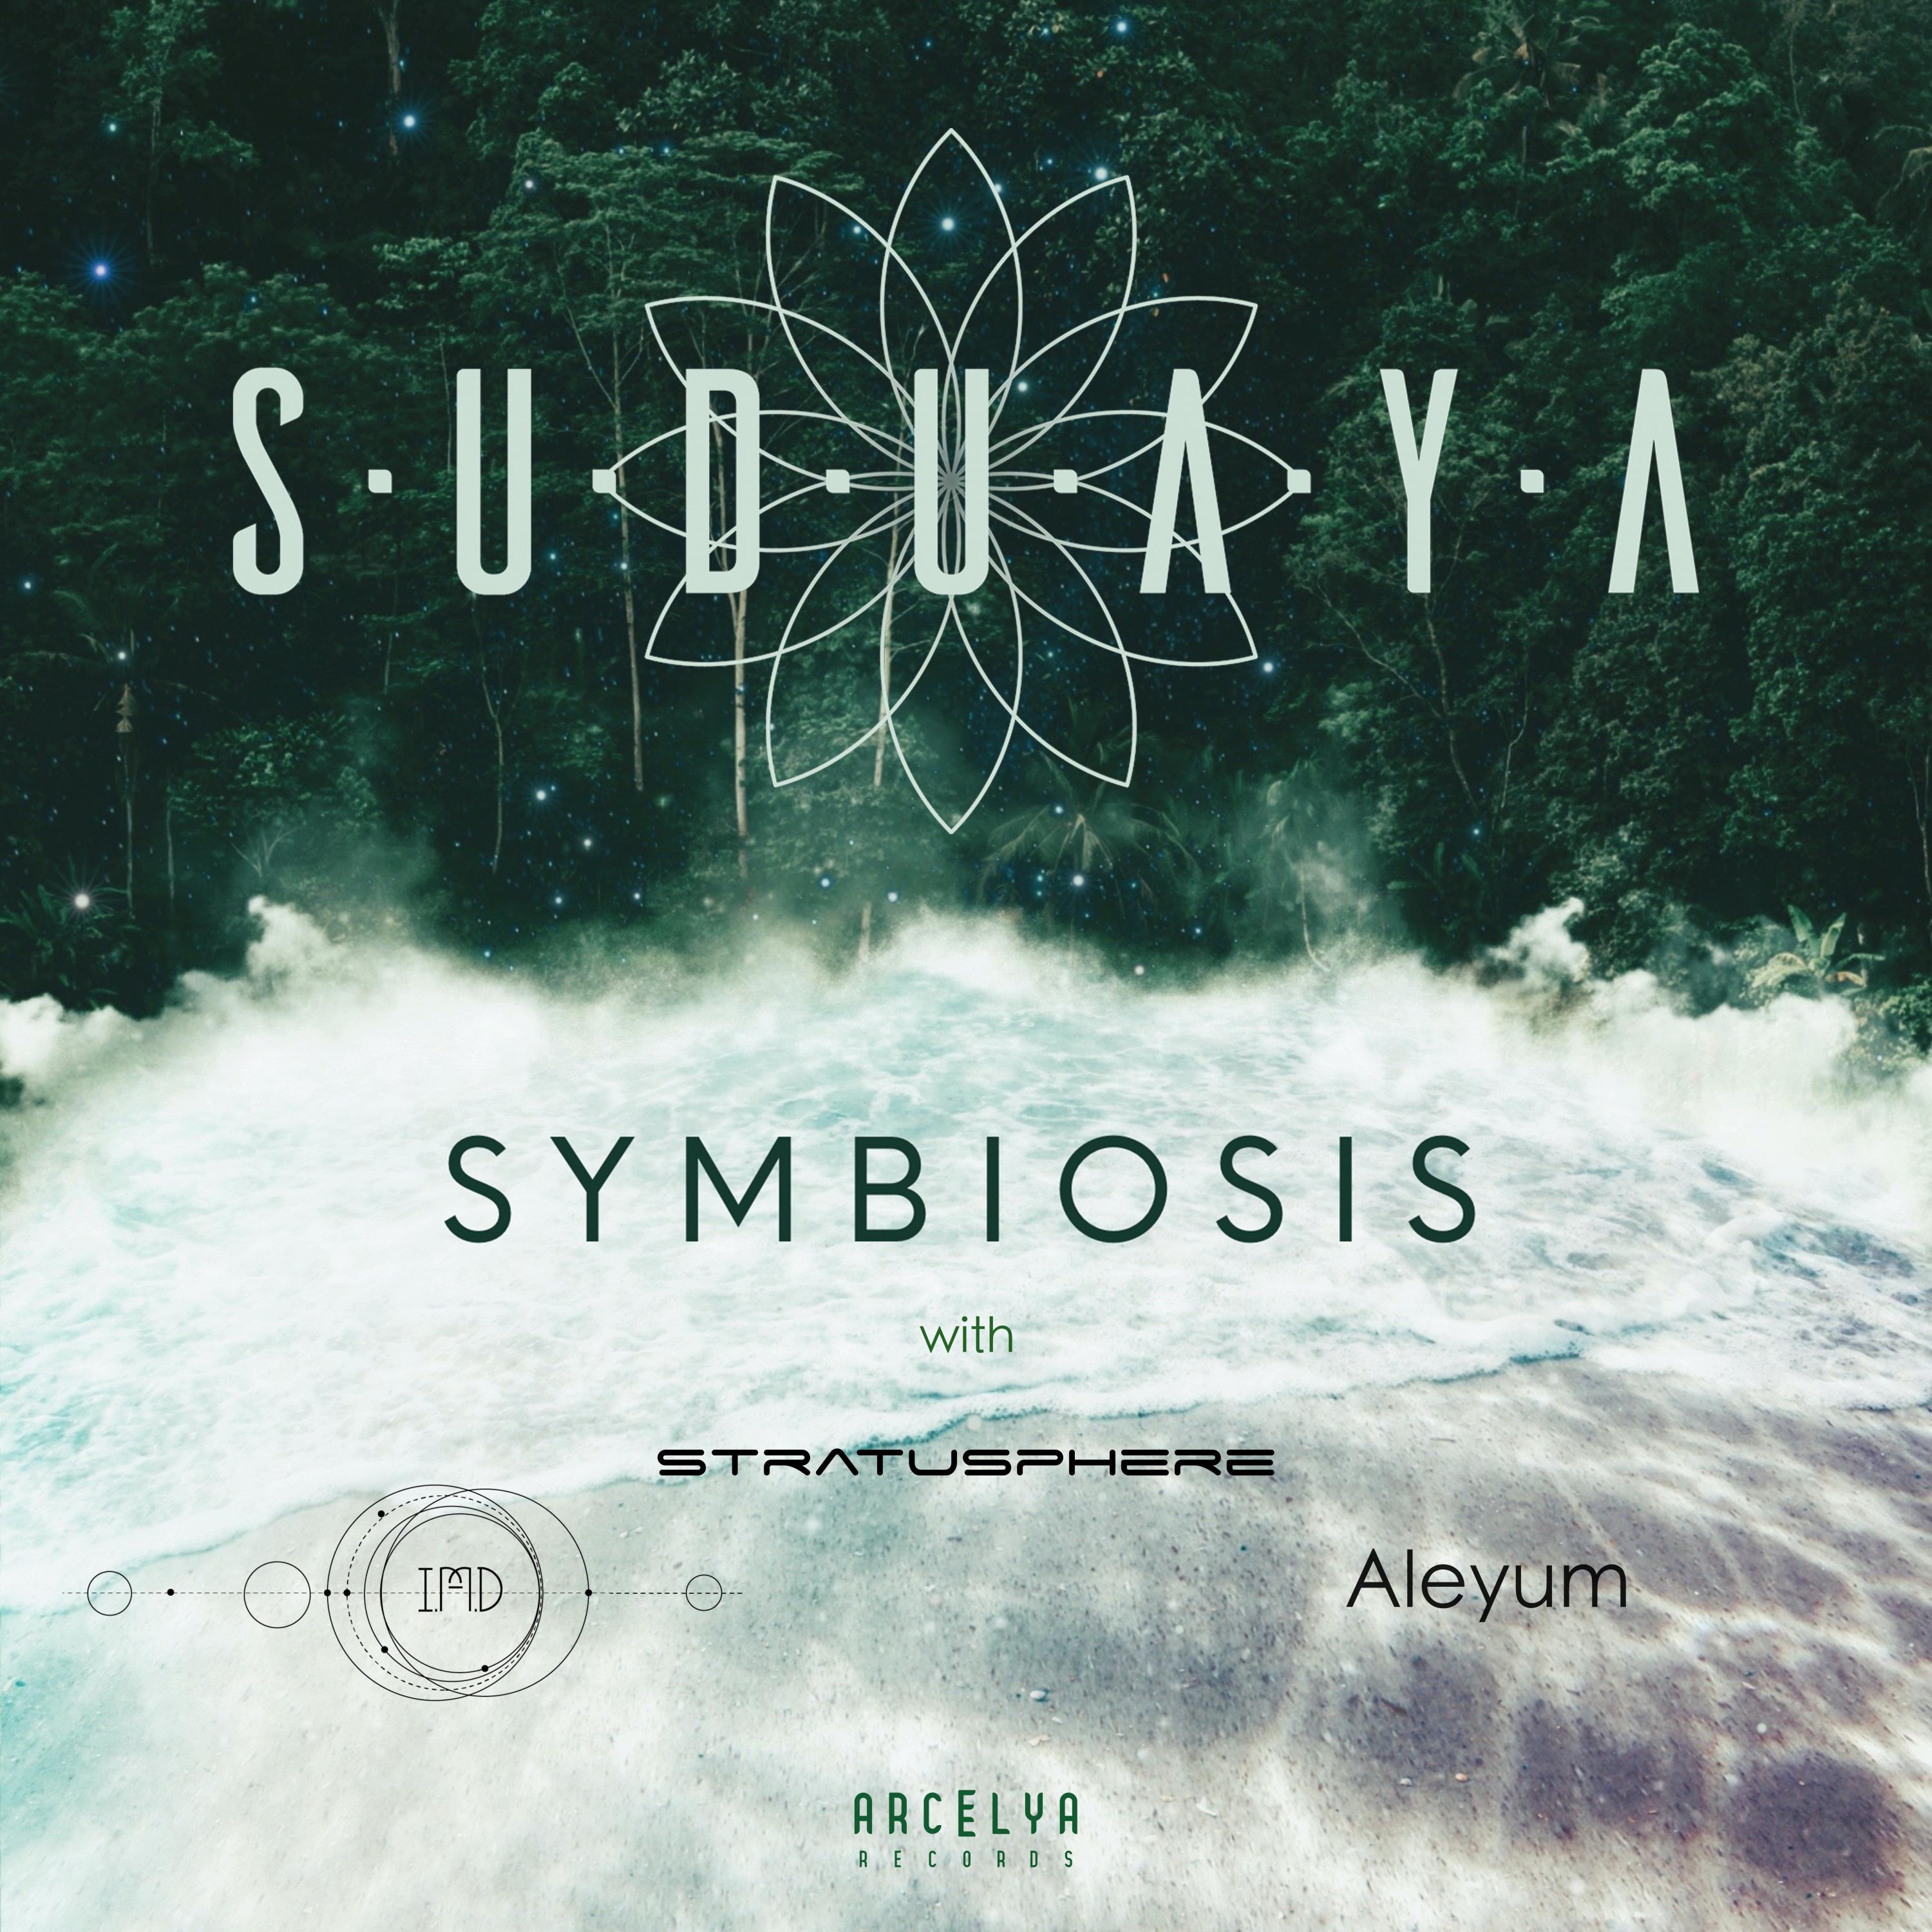 Suduaya - Brise de Vie (Original Mix)